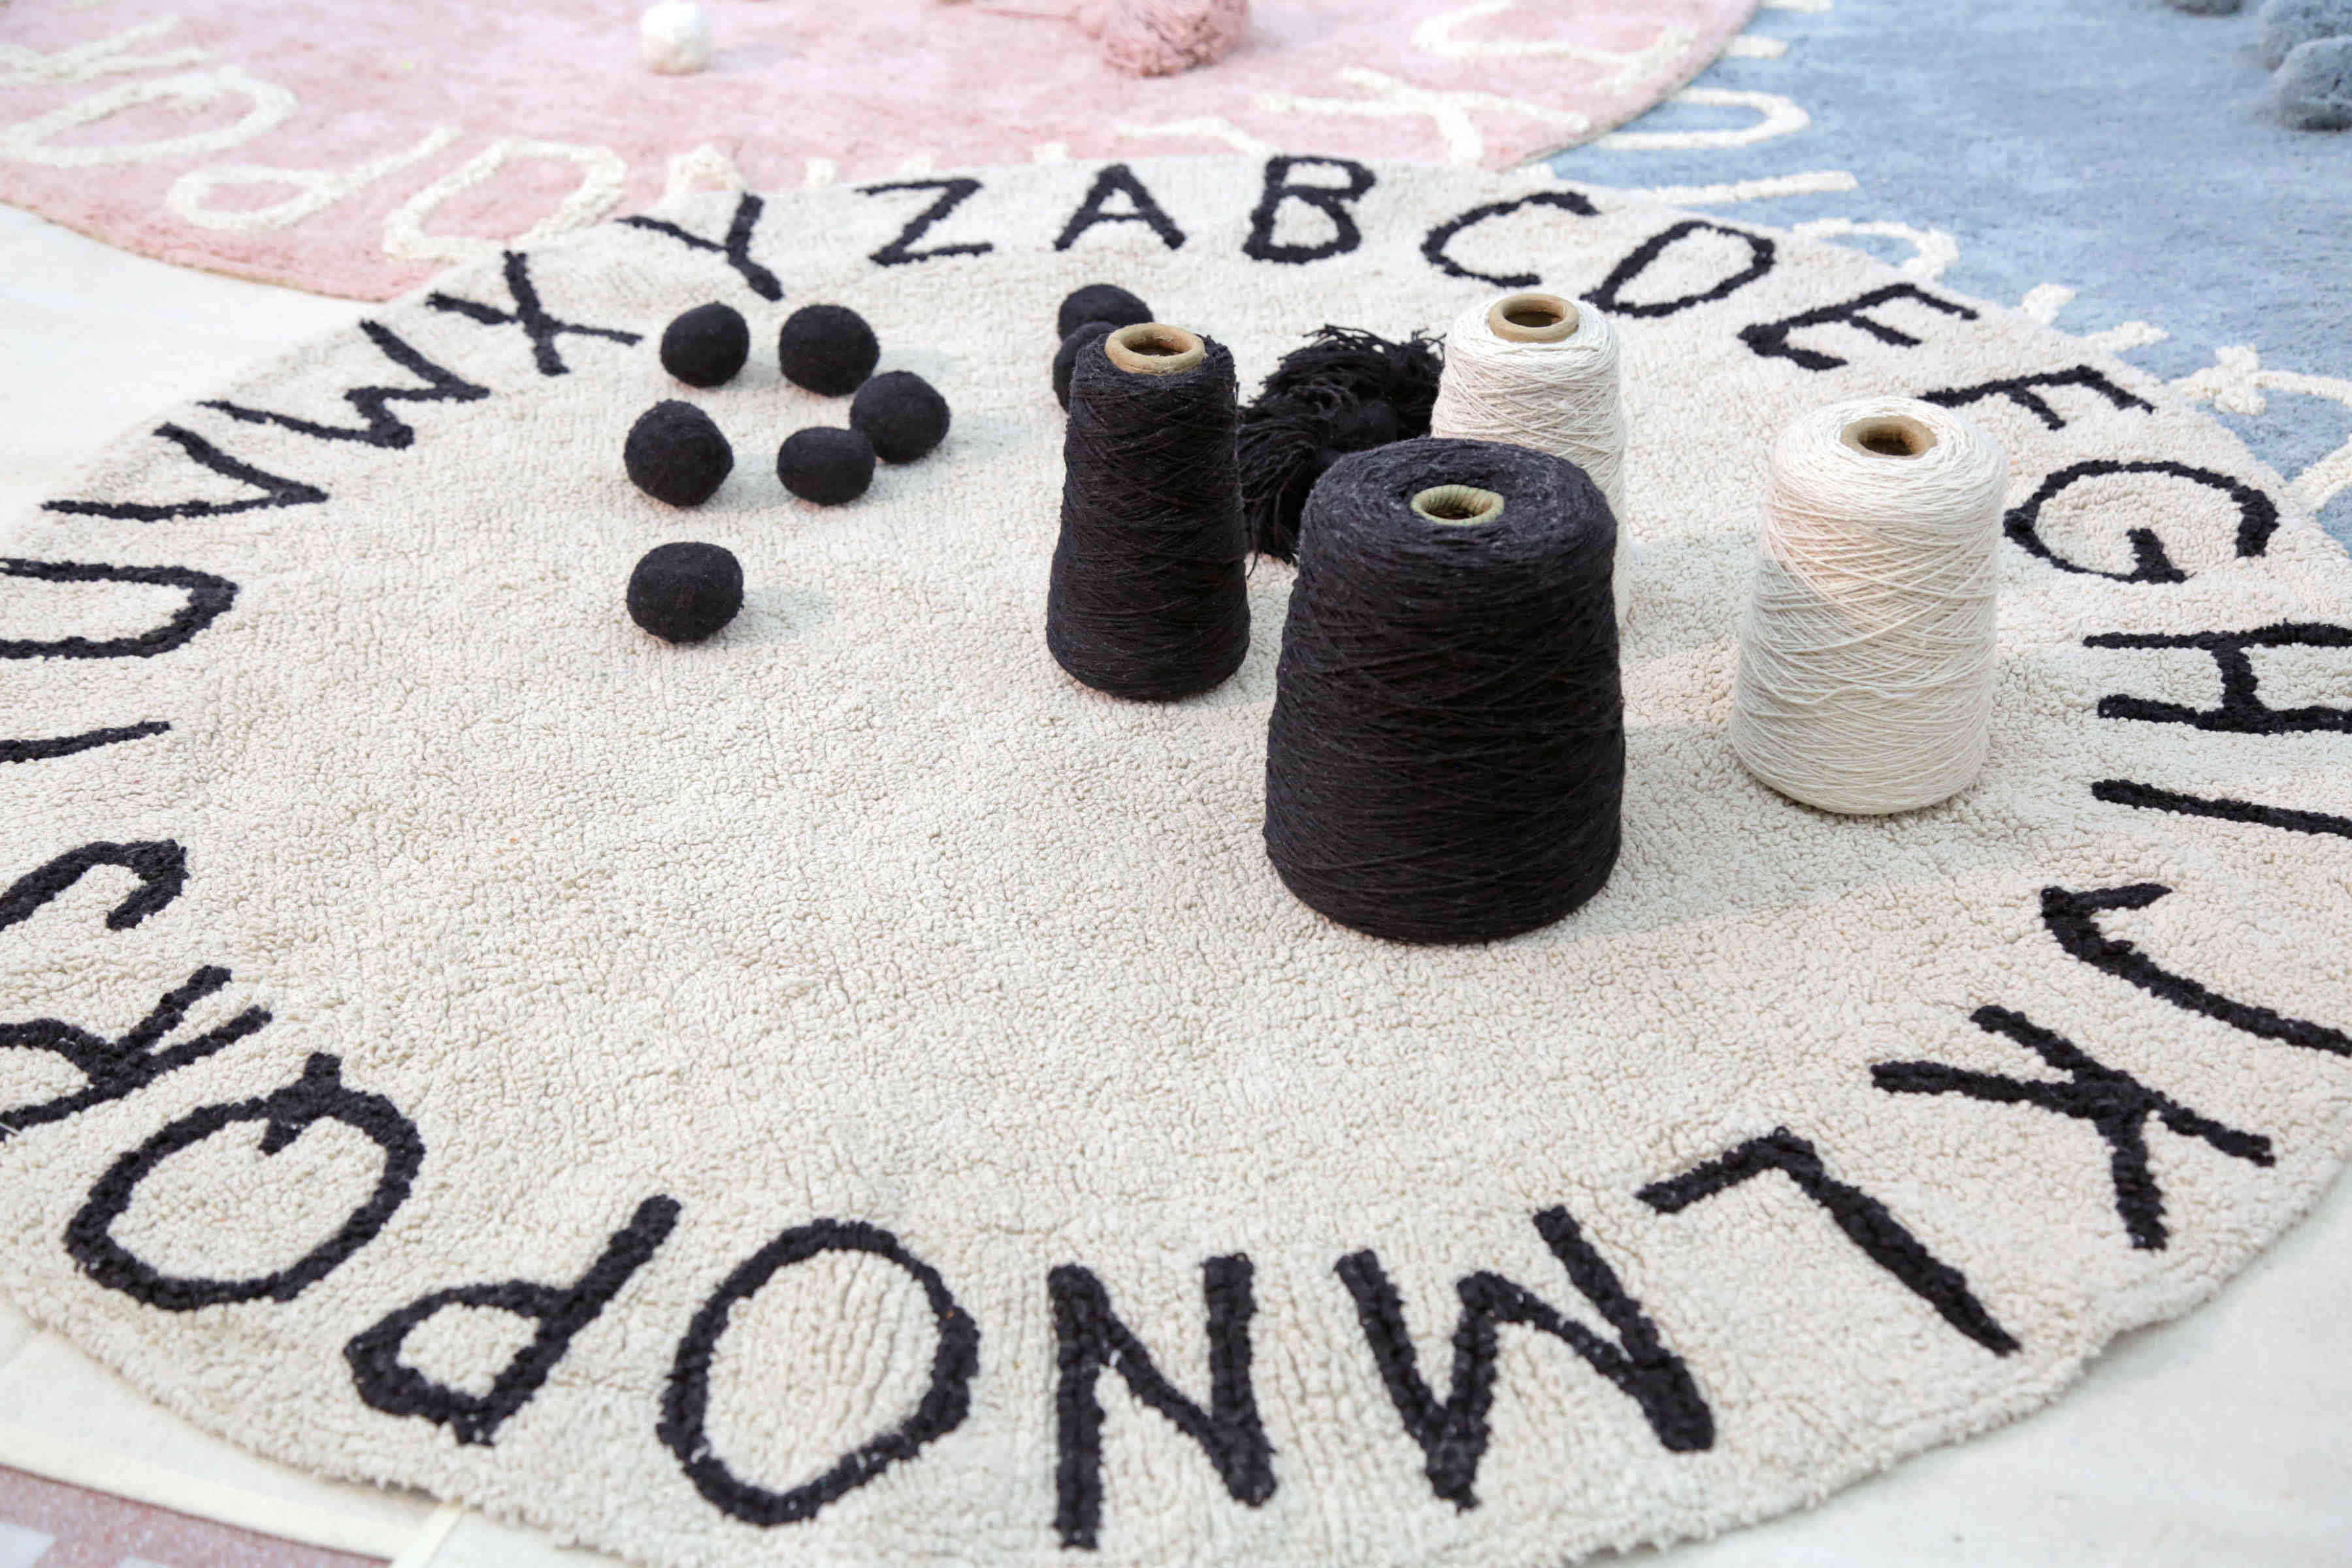 Circular white cotton rug decorated with a black alphabet border